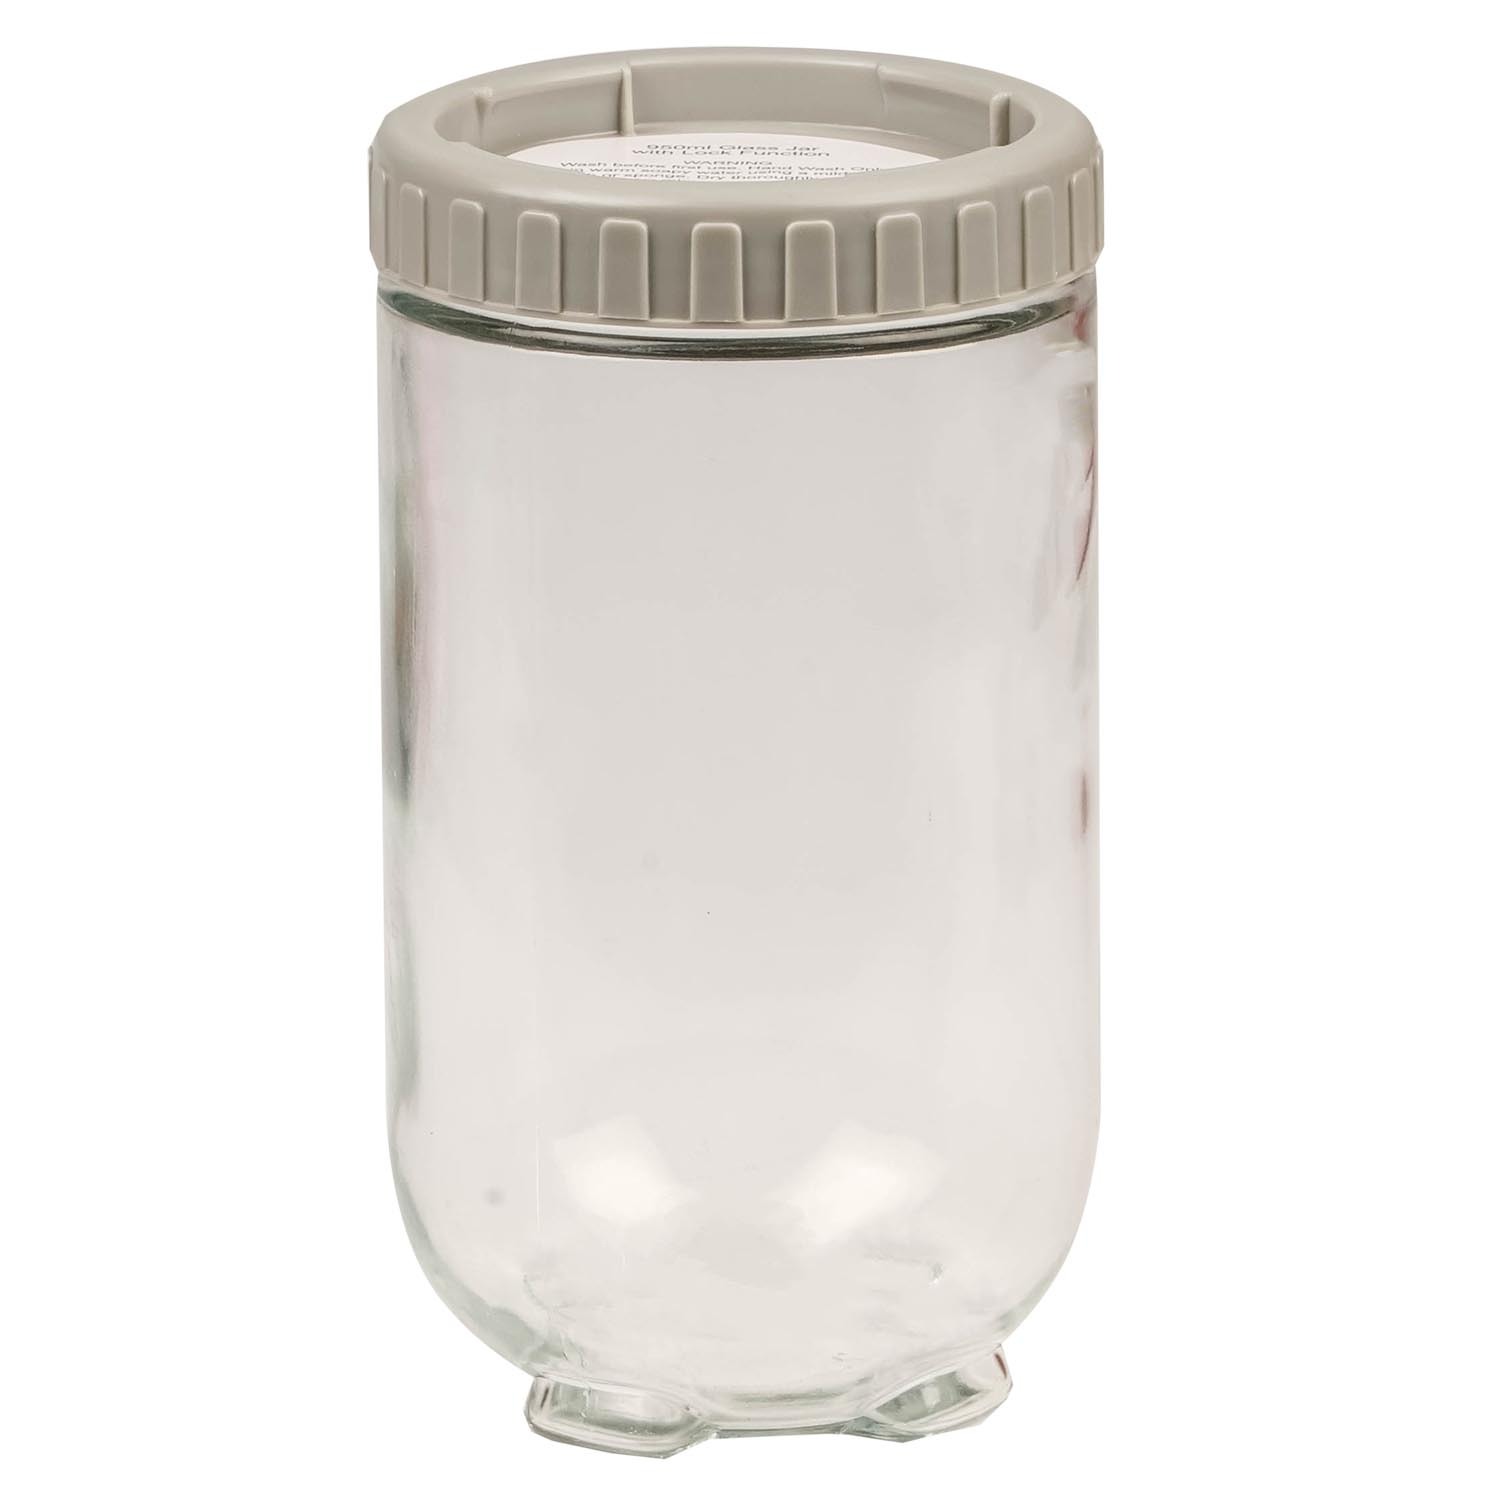 950ml Glass Storage Jar with Lock Function Lid Image